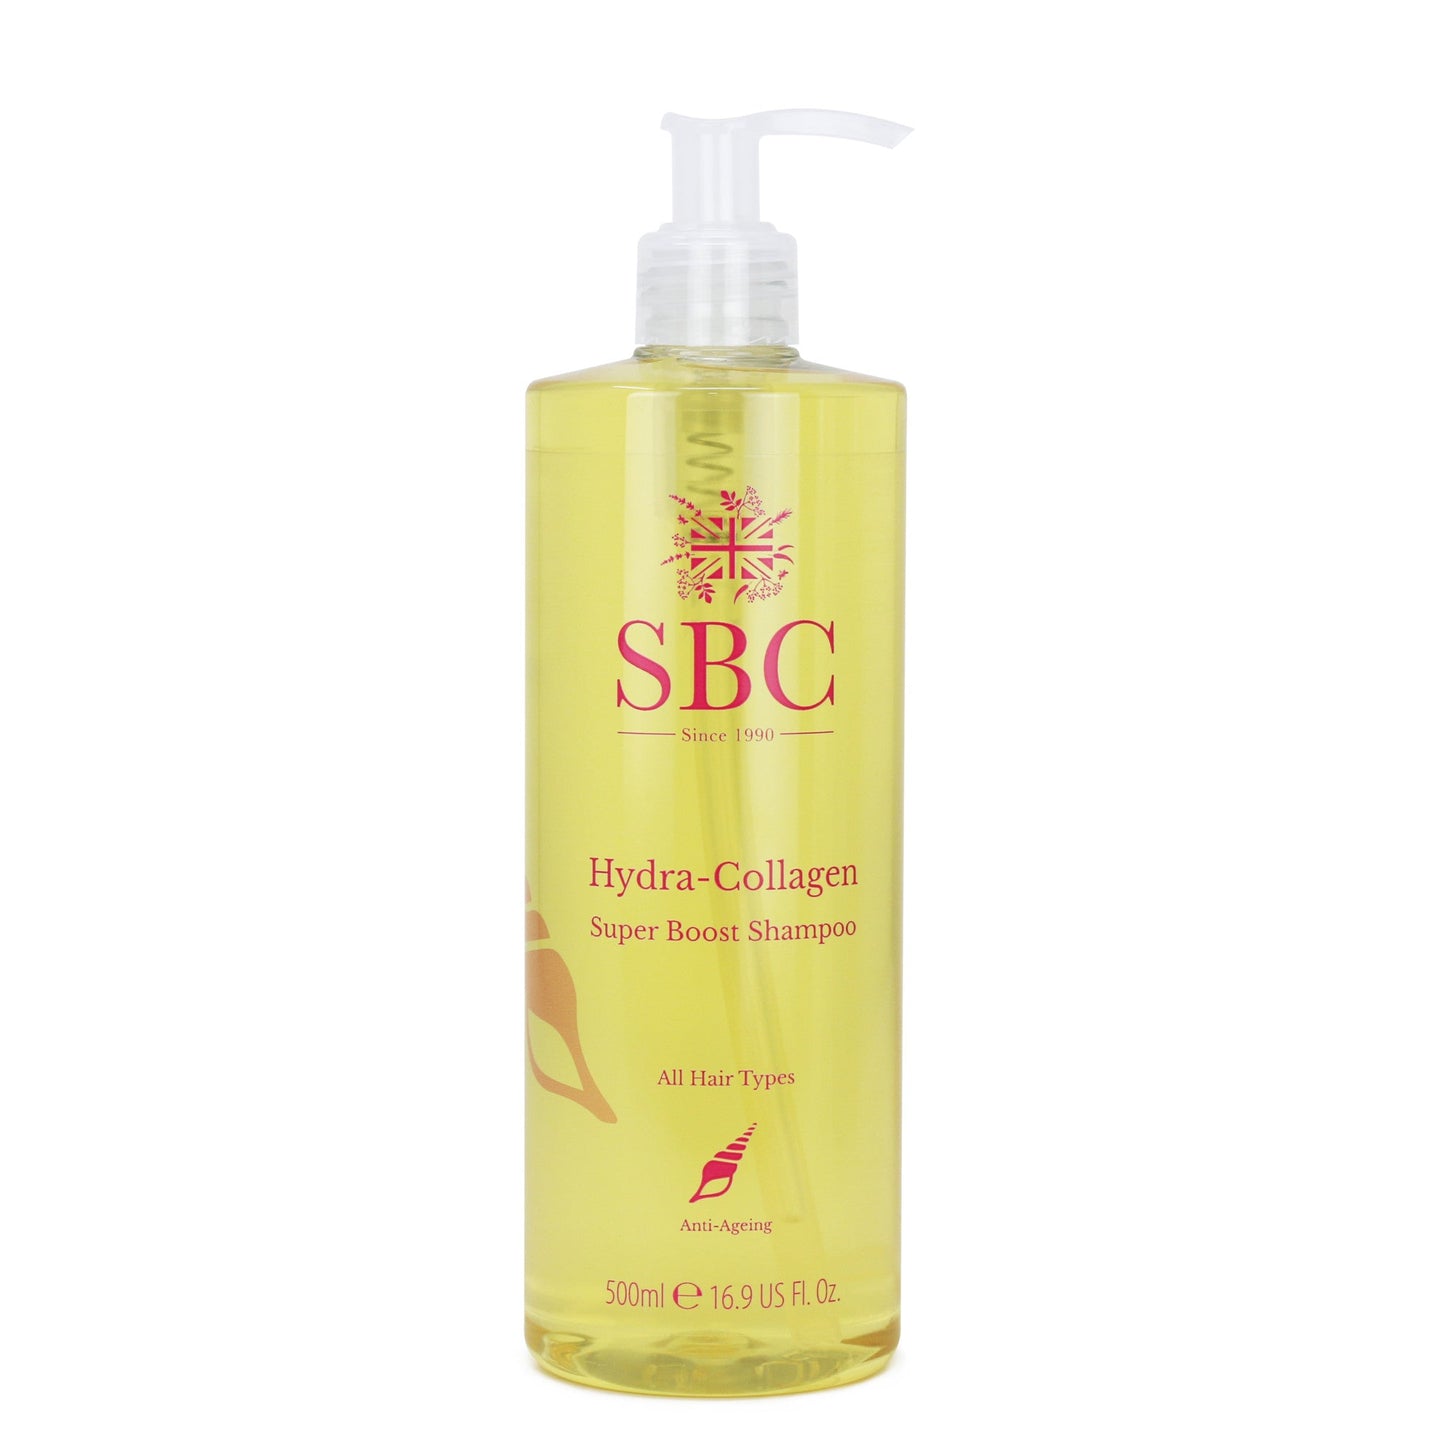 Hydra-Collagen Super Boost Shampoo 500ml on a white background 